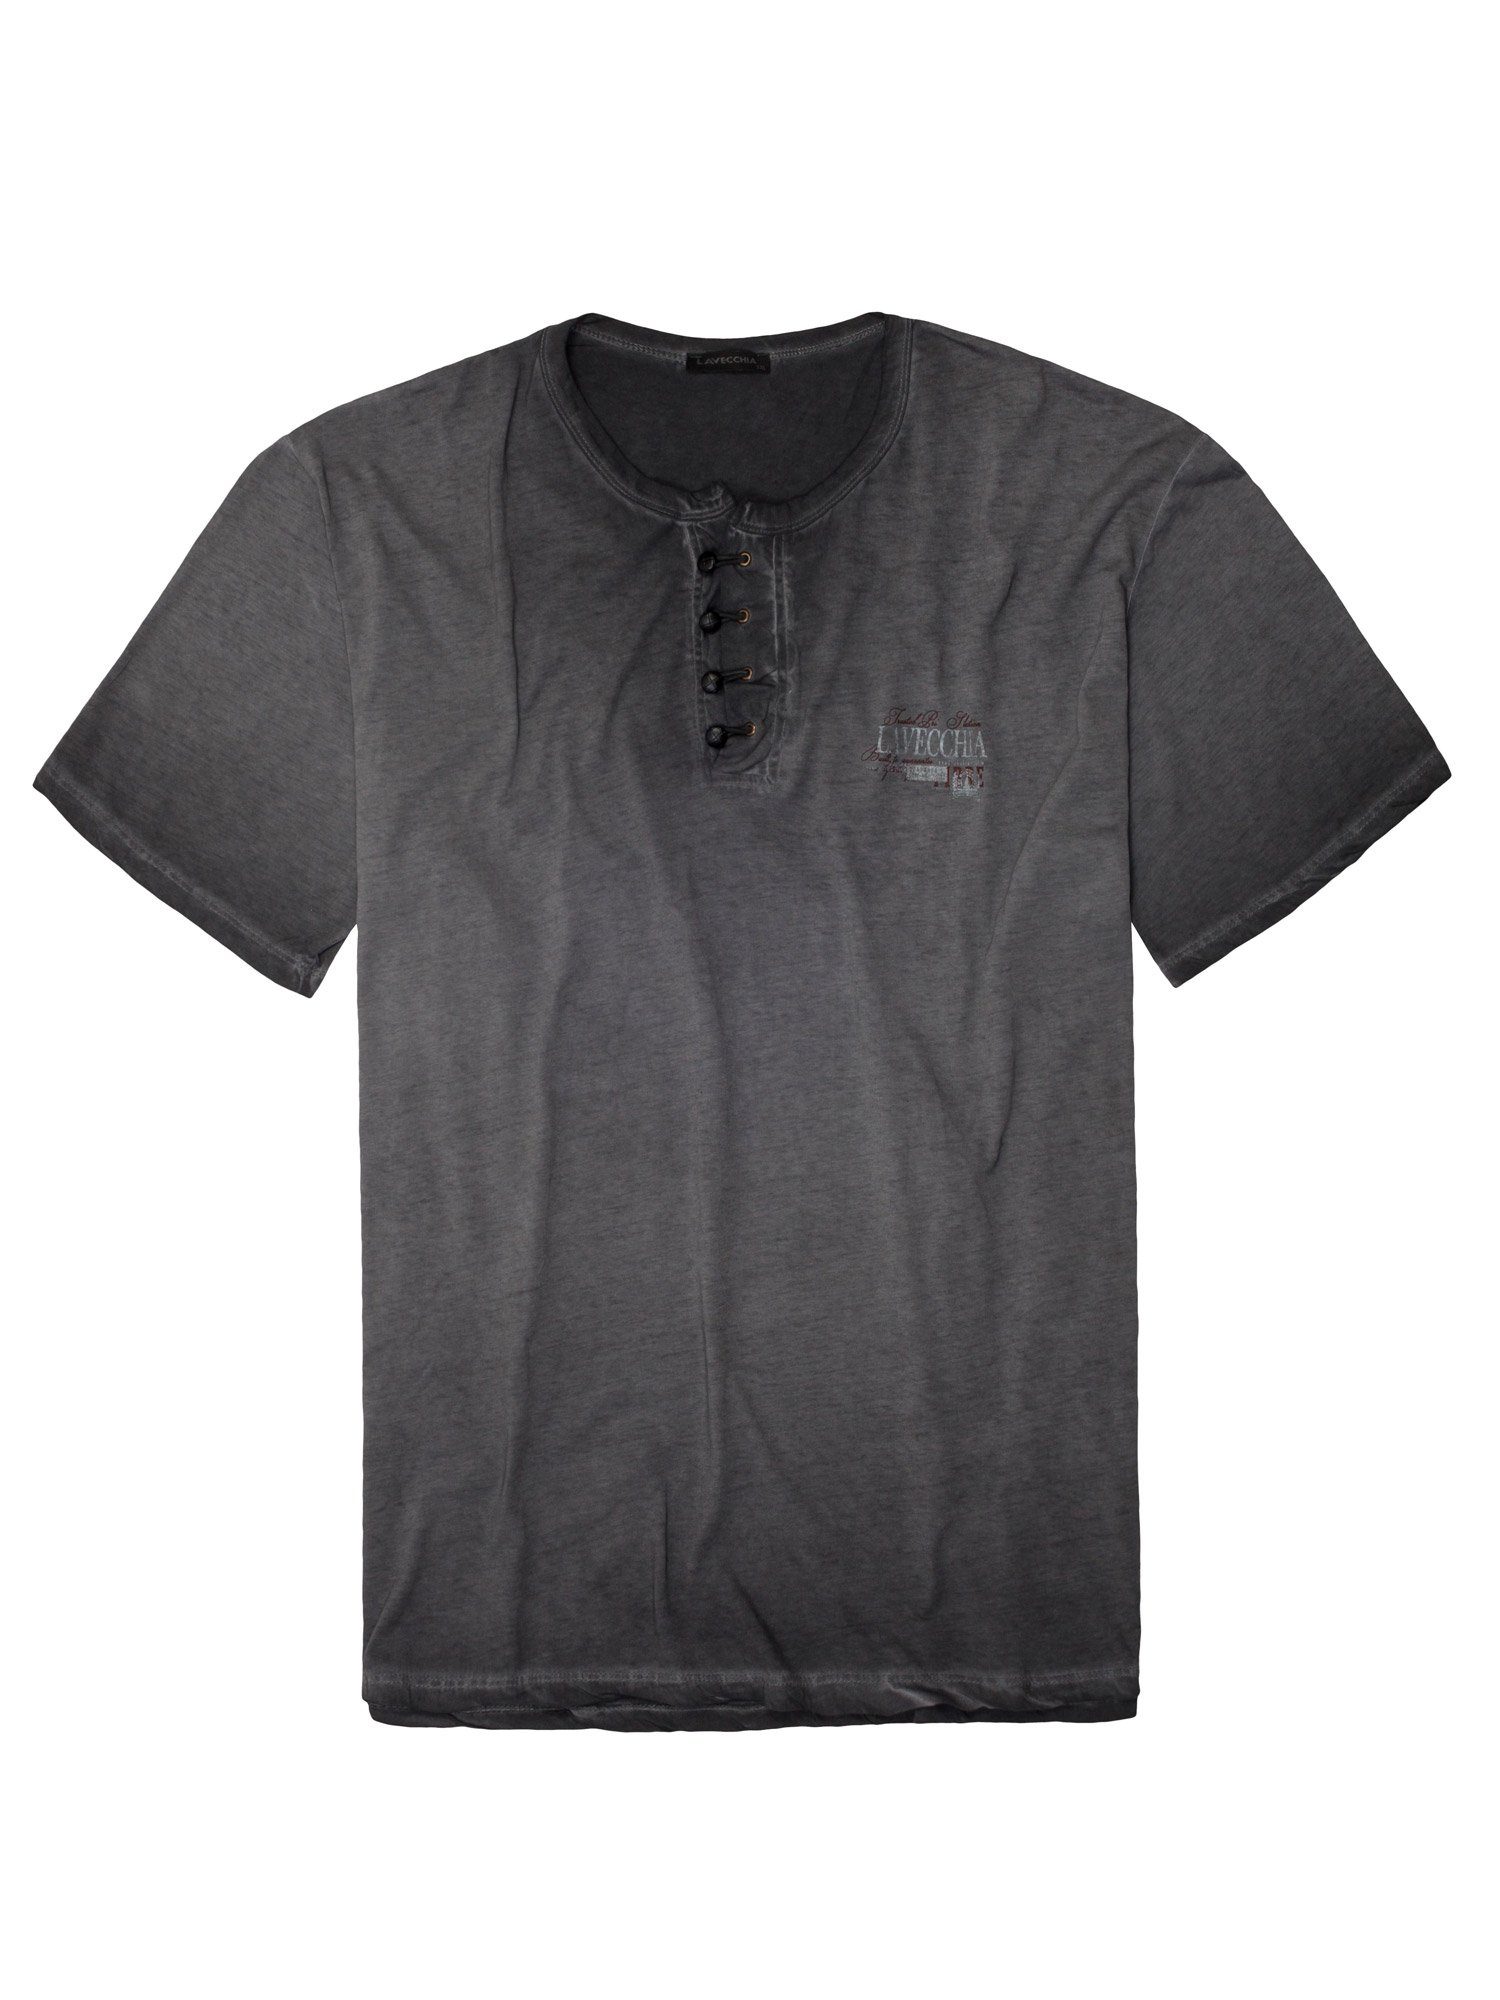 Lavecchia T-Shirt Übergrößen Herren Shirt LV-4055 Herrenshirt Kapuzen Shirt anthrazit